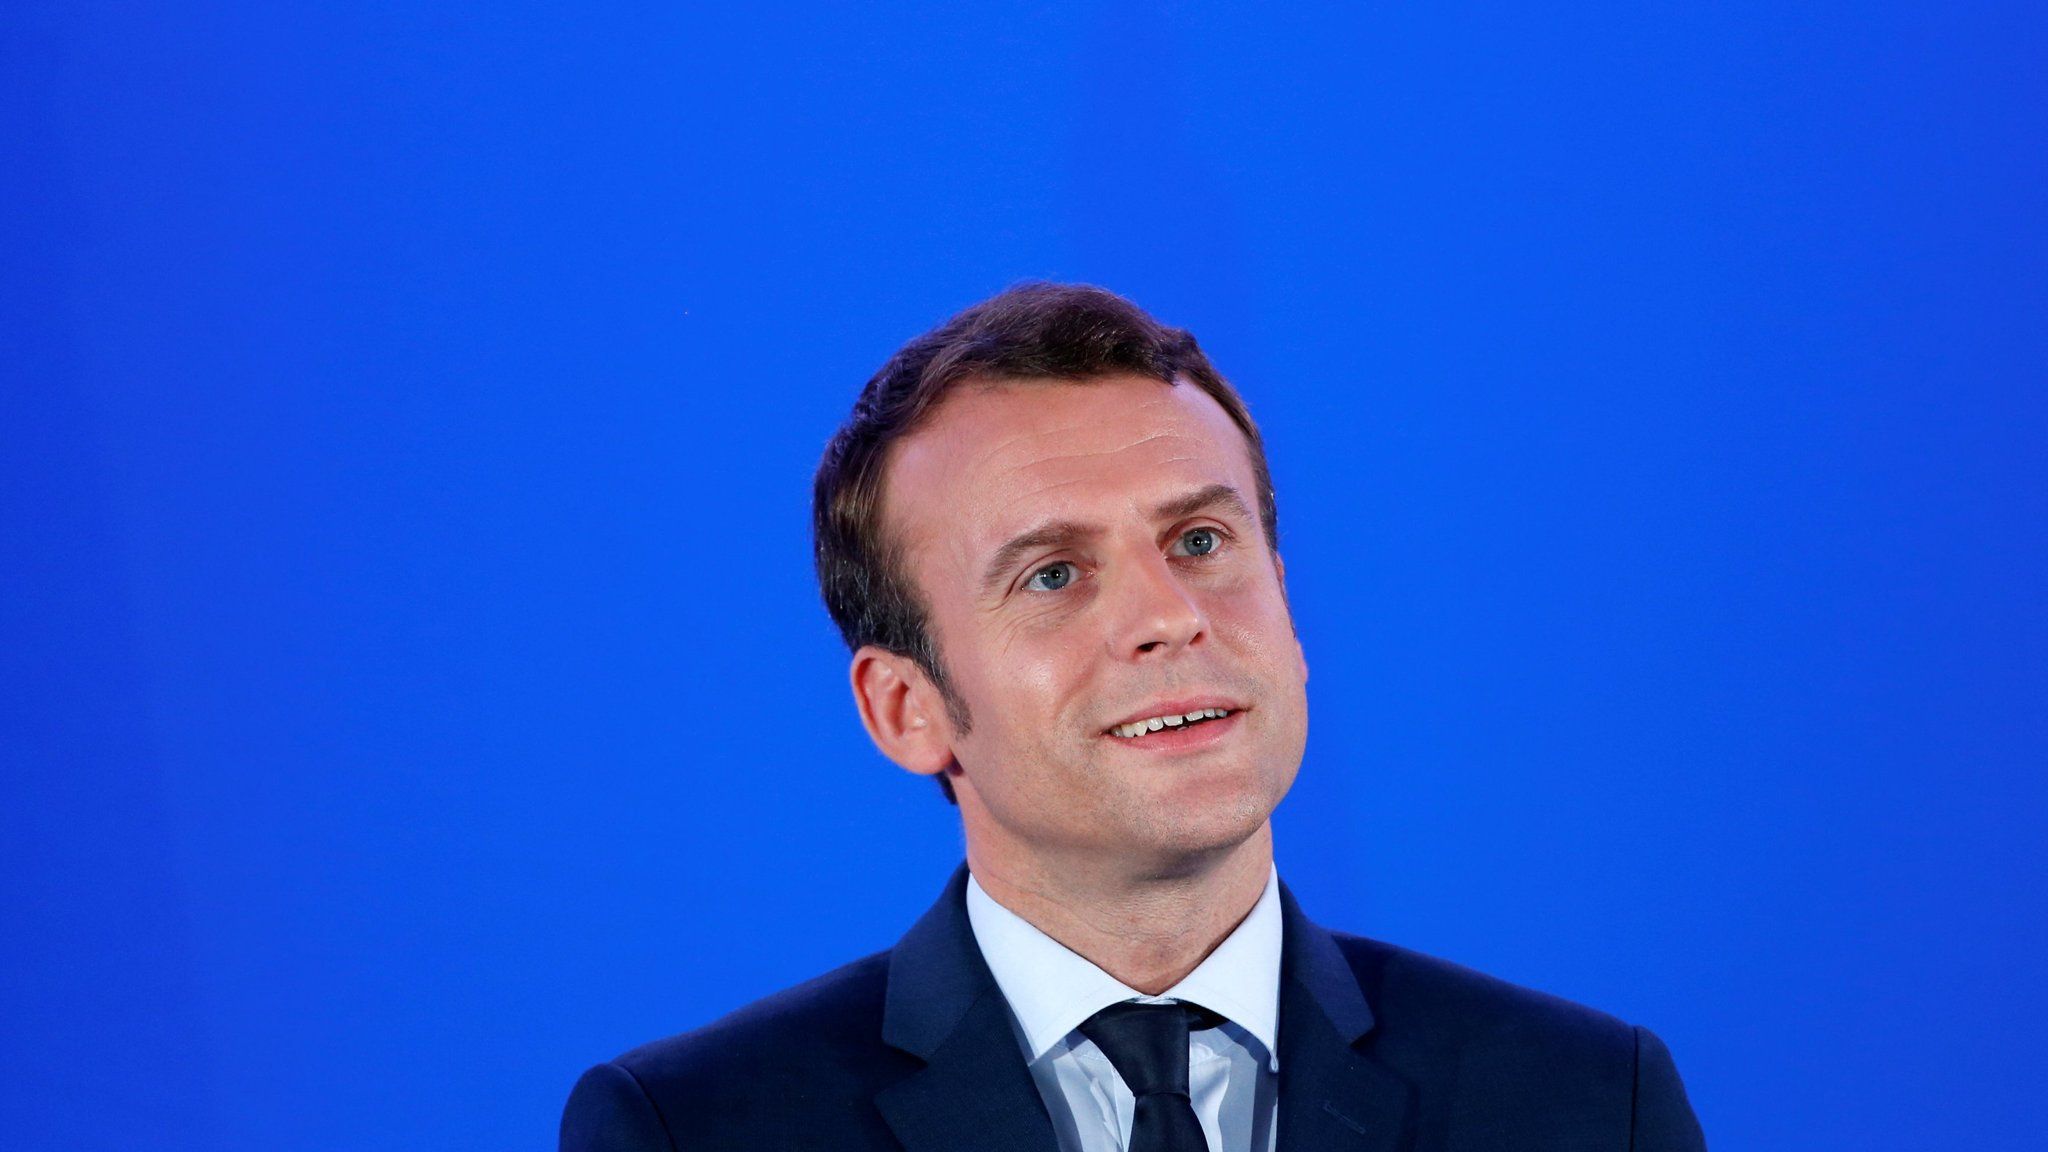 Emmanuel Macron's Rothschild years make him an easy election target